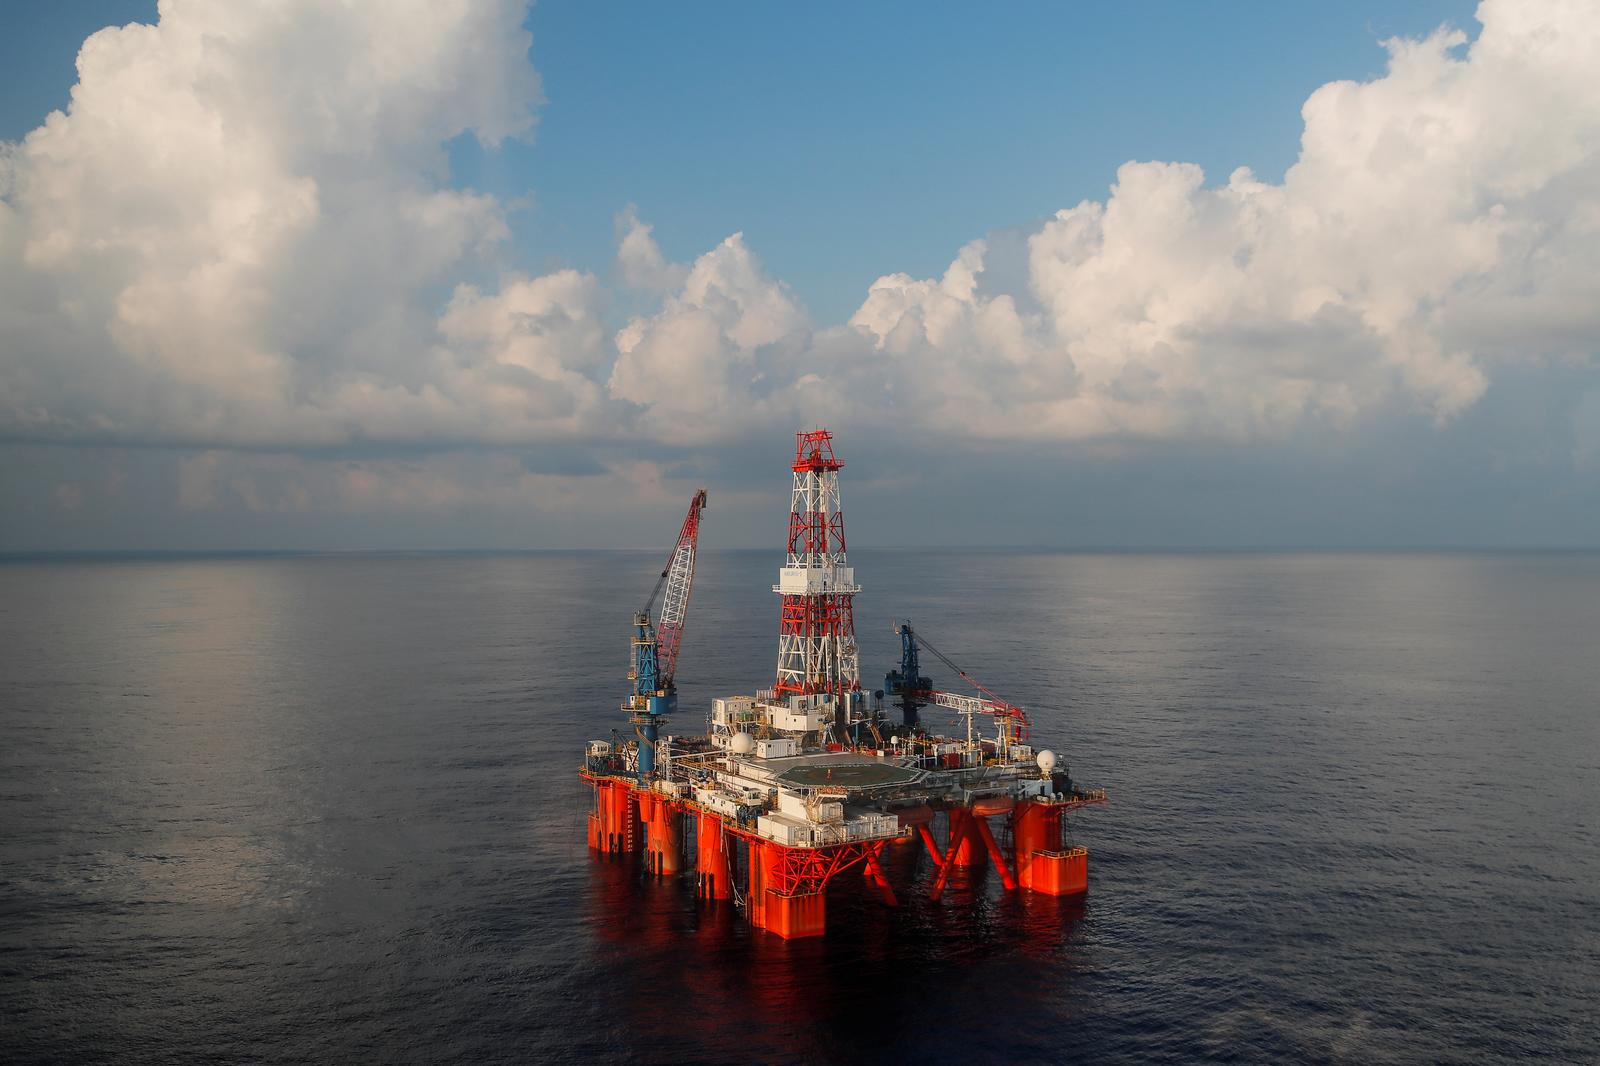 Vietnam extends operation of East Vietnam Sea oil rig amid Beijing’s harassment at sea